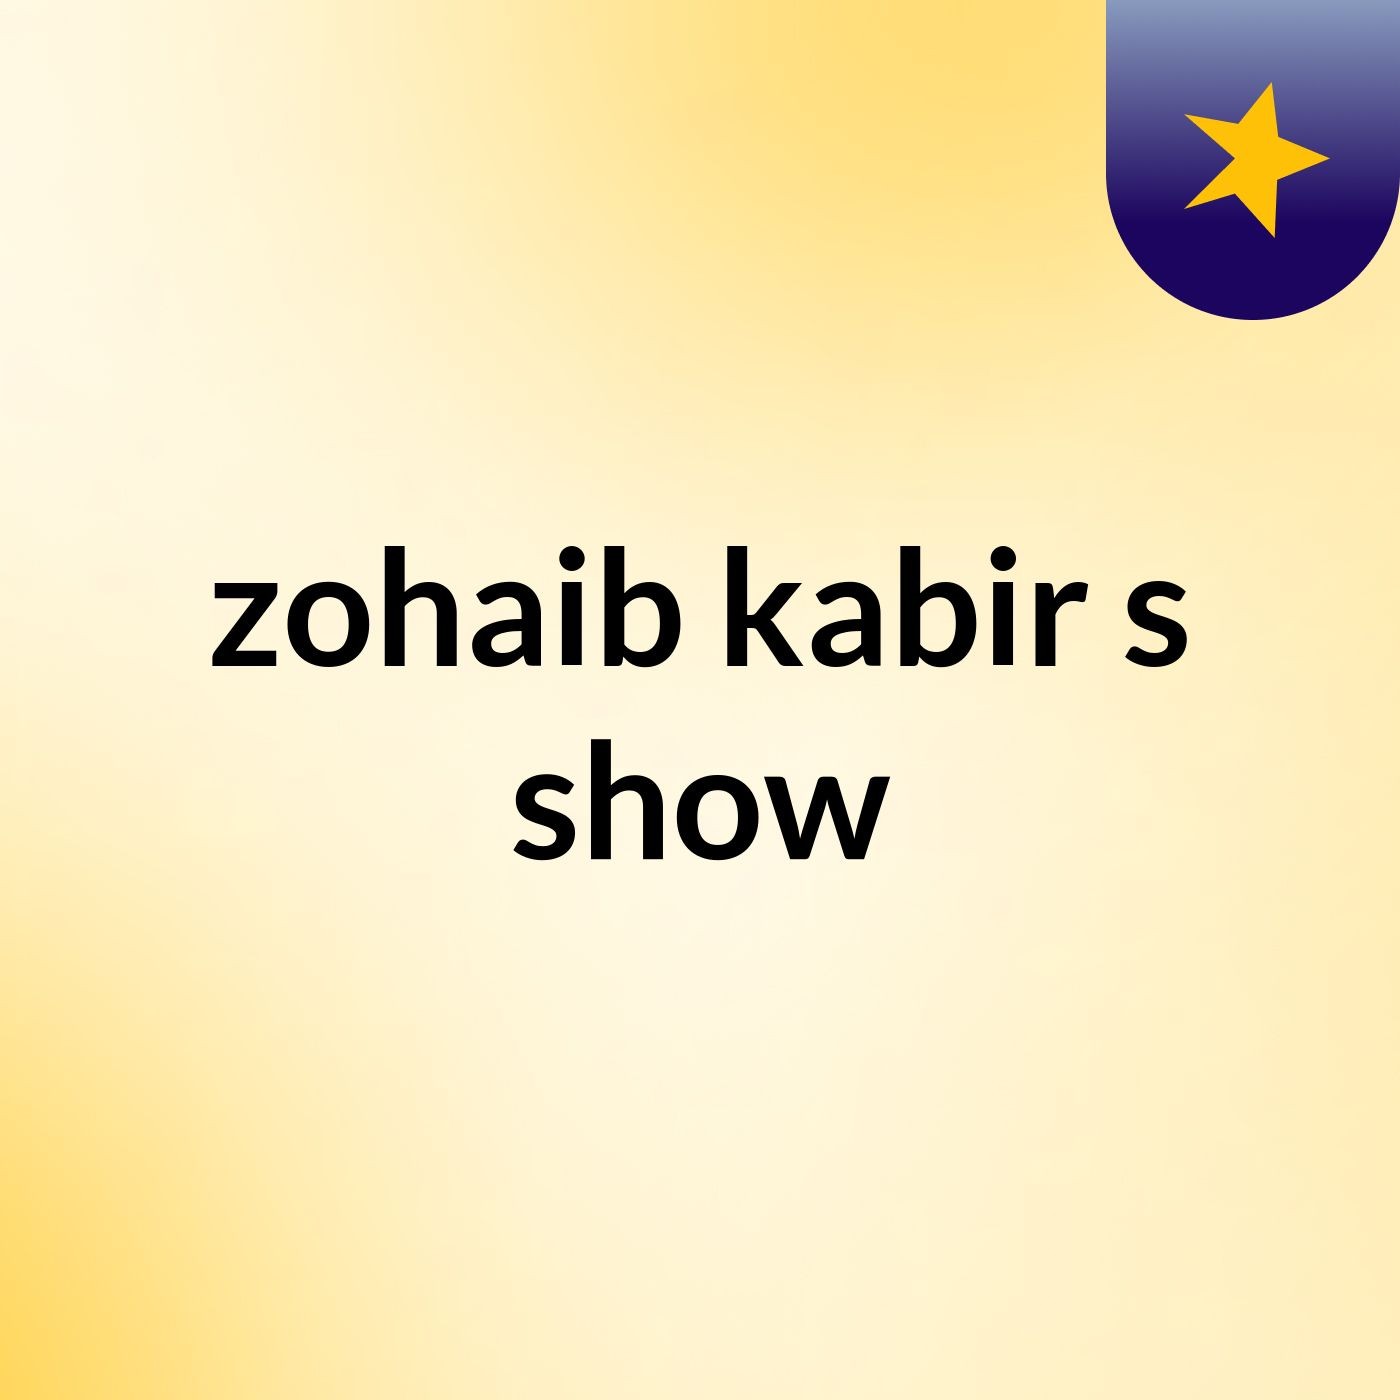 zohaib kabir's show